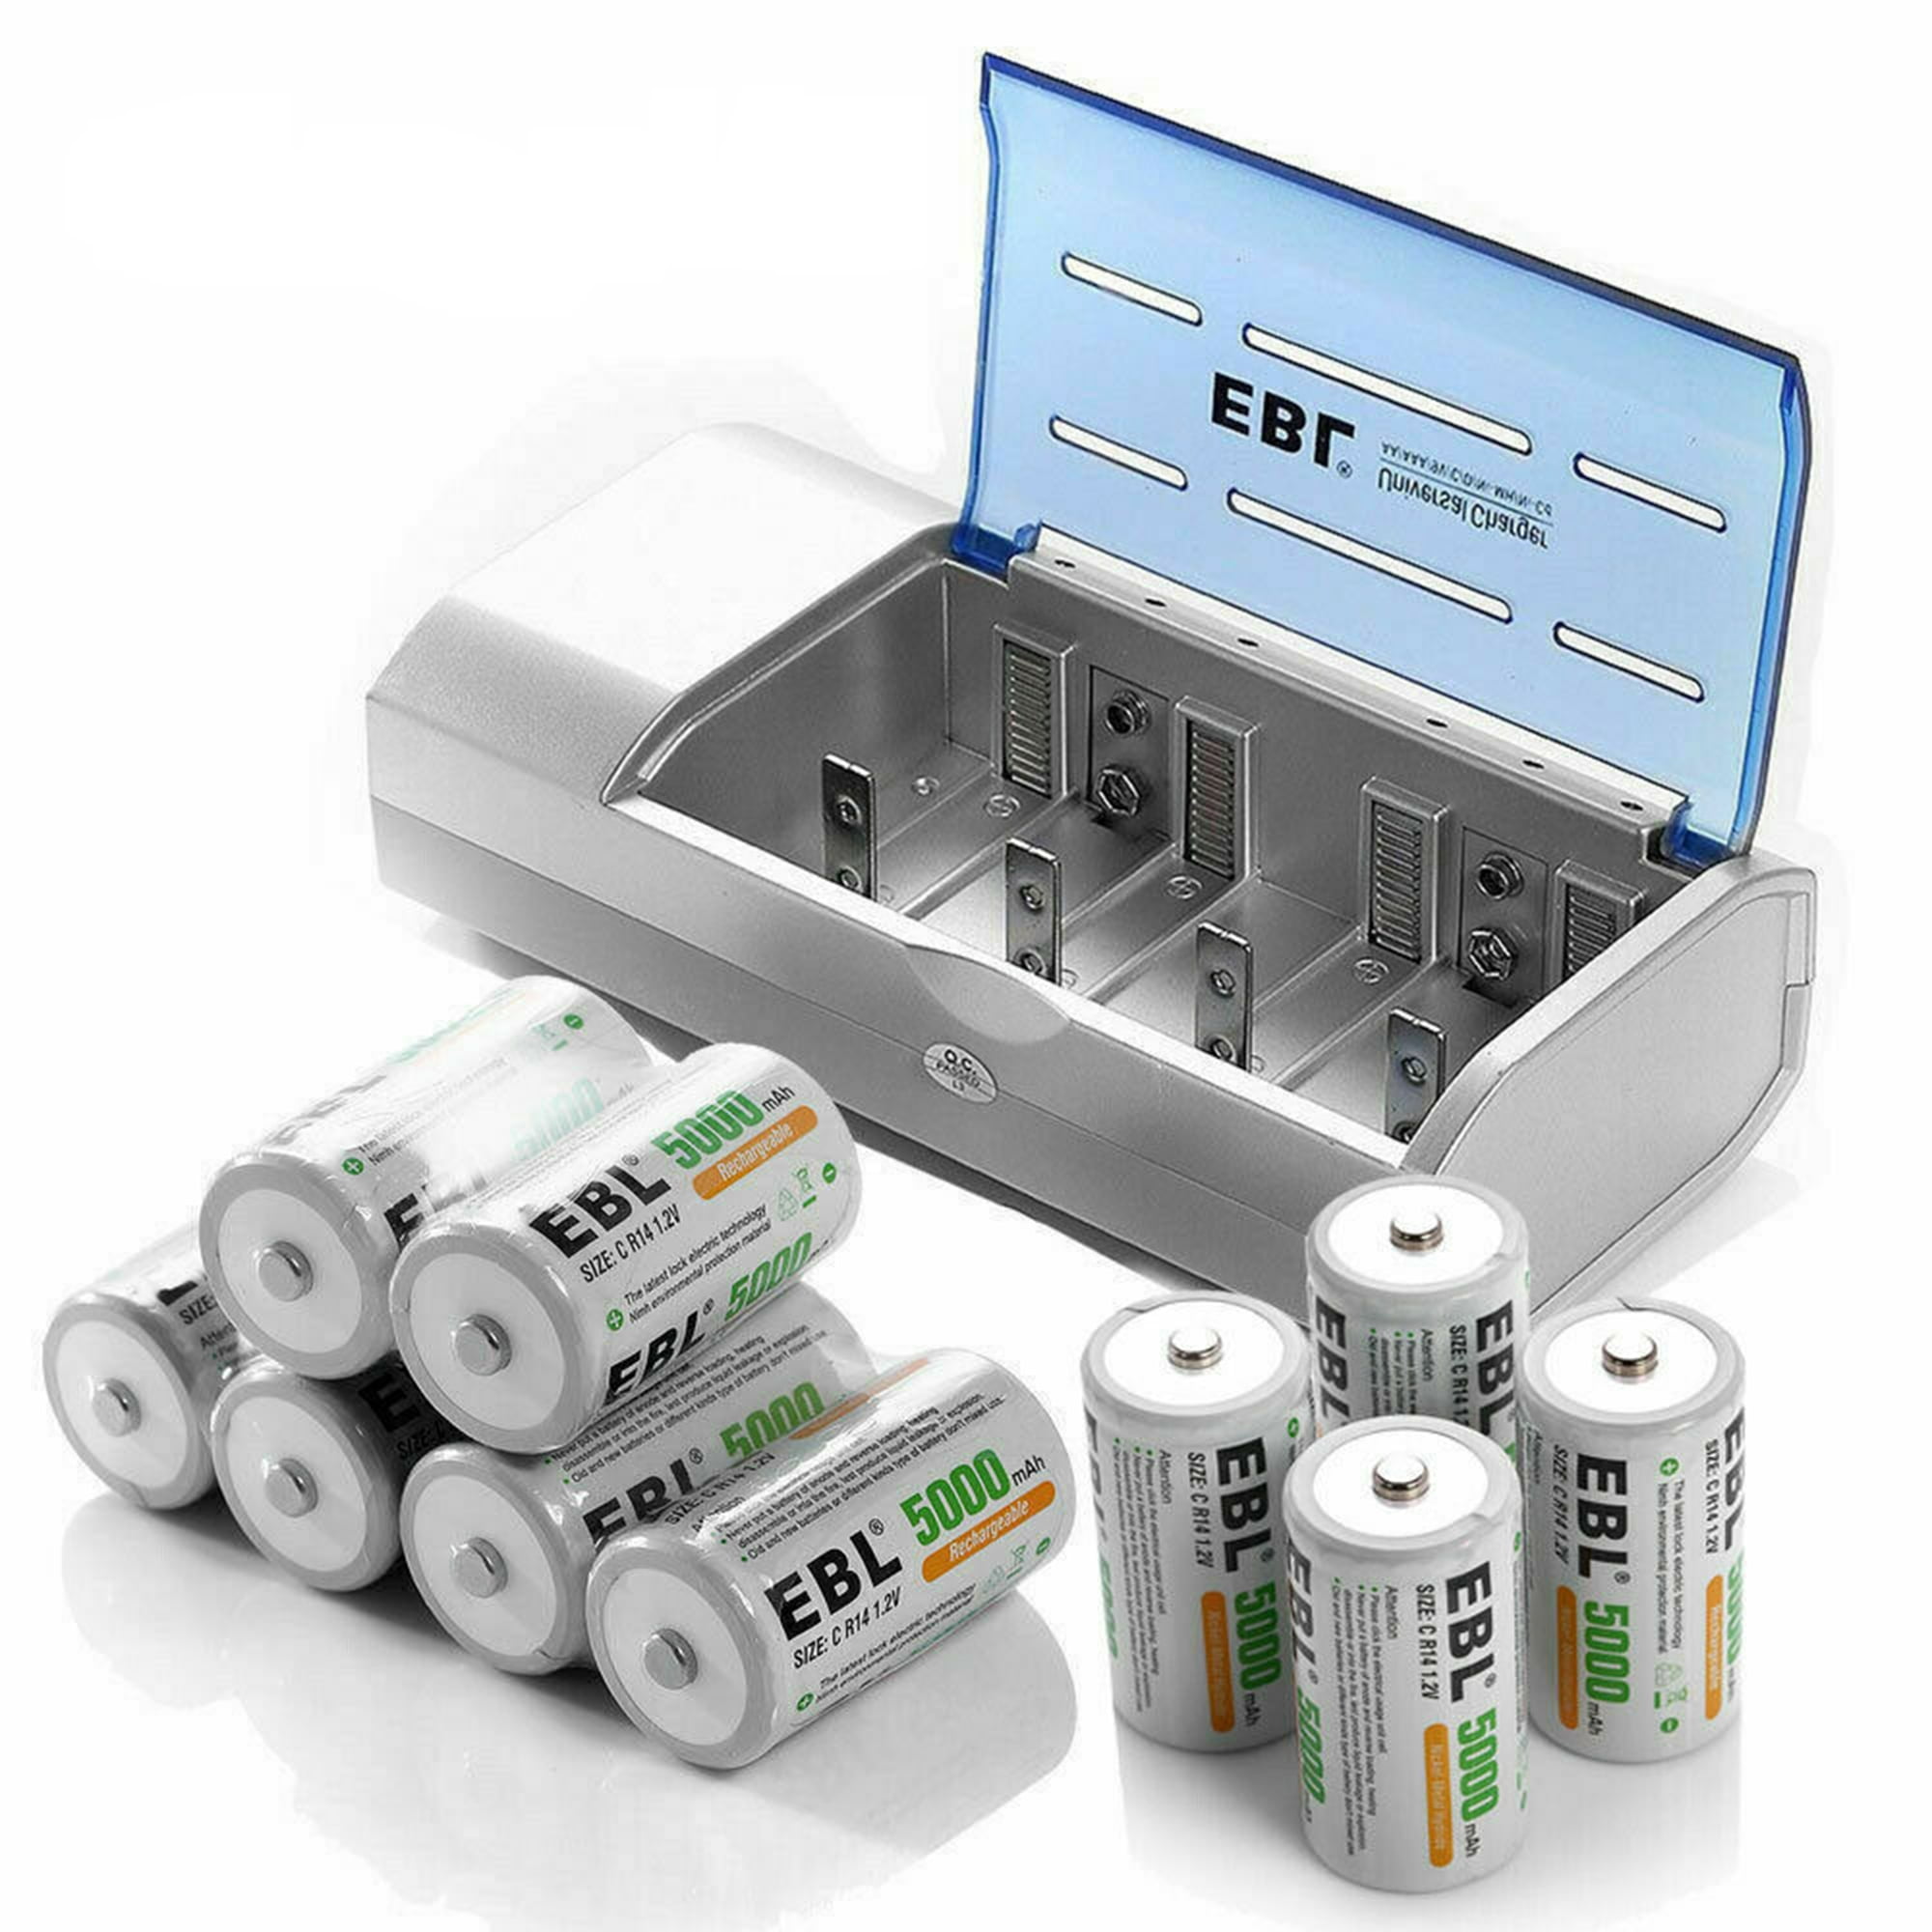 C batteries. Зарядка для AA/AAA аккумуляторных батареек c905w. D, C, AA, AAA И 9v аккумуляторы. Аккумуляторы NICD 20х40мм форм фактор. EBL.